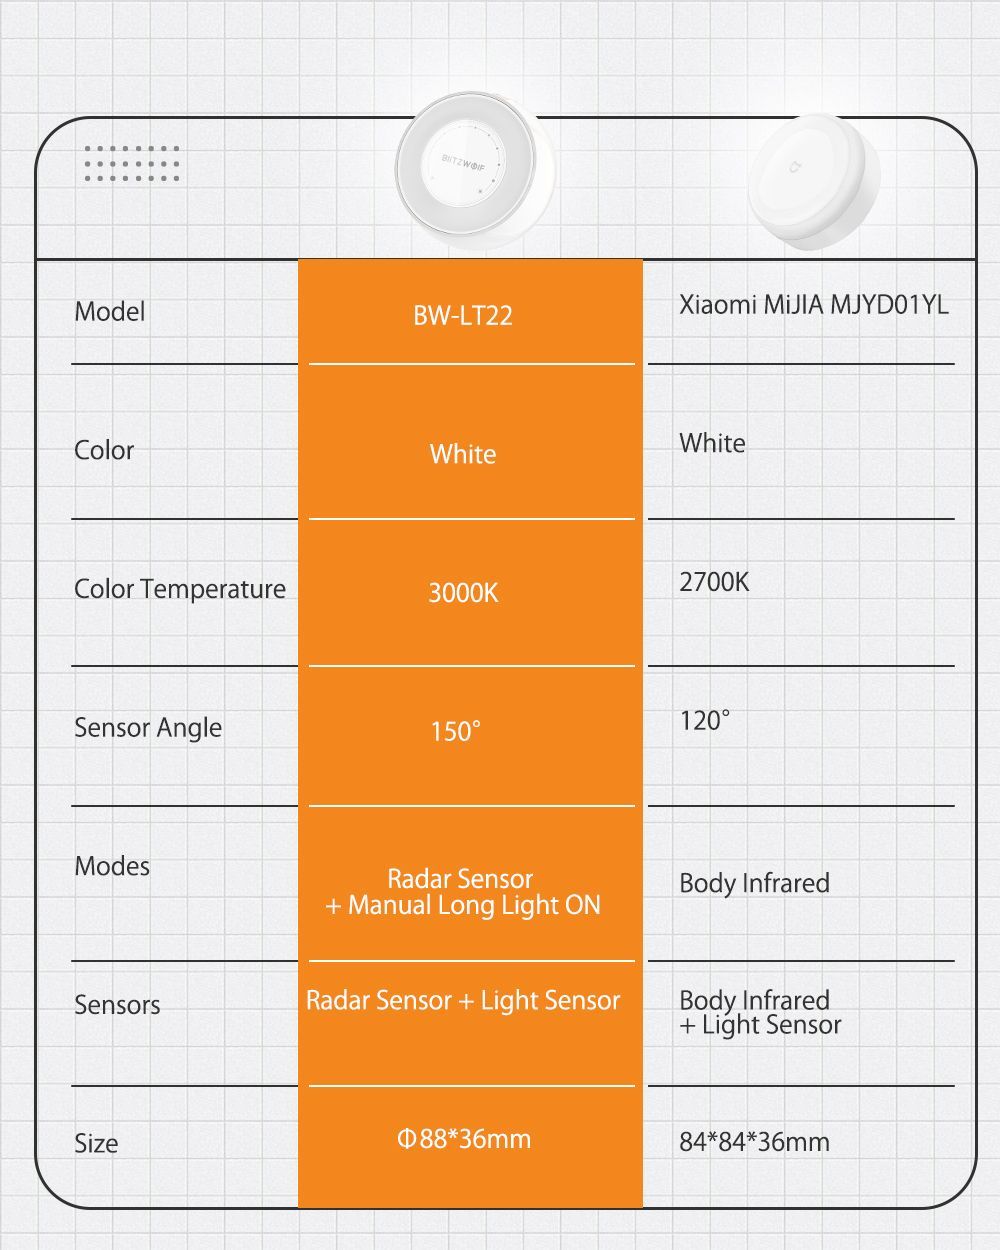 BlitzWolfreg-BW-LT22-Radar-Sensor-LED-Night-Light-USB-Rechargeable-Lithium-Battery-Touch-Dimming-Han-1599851